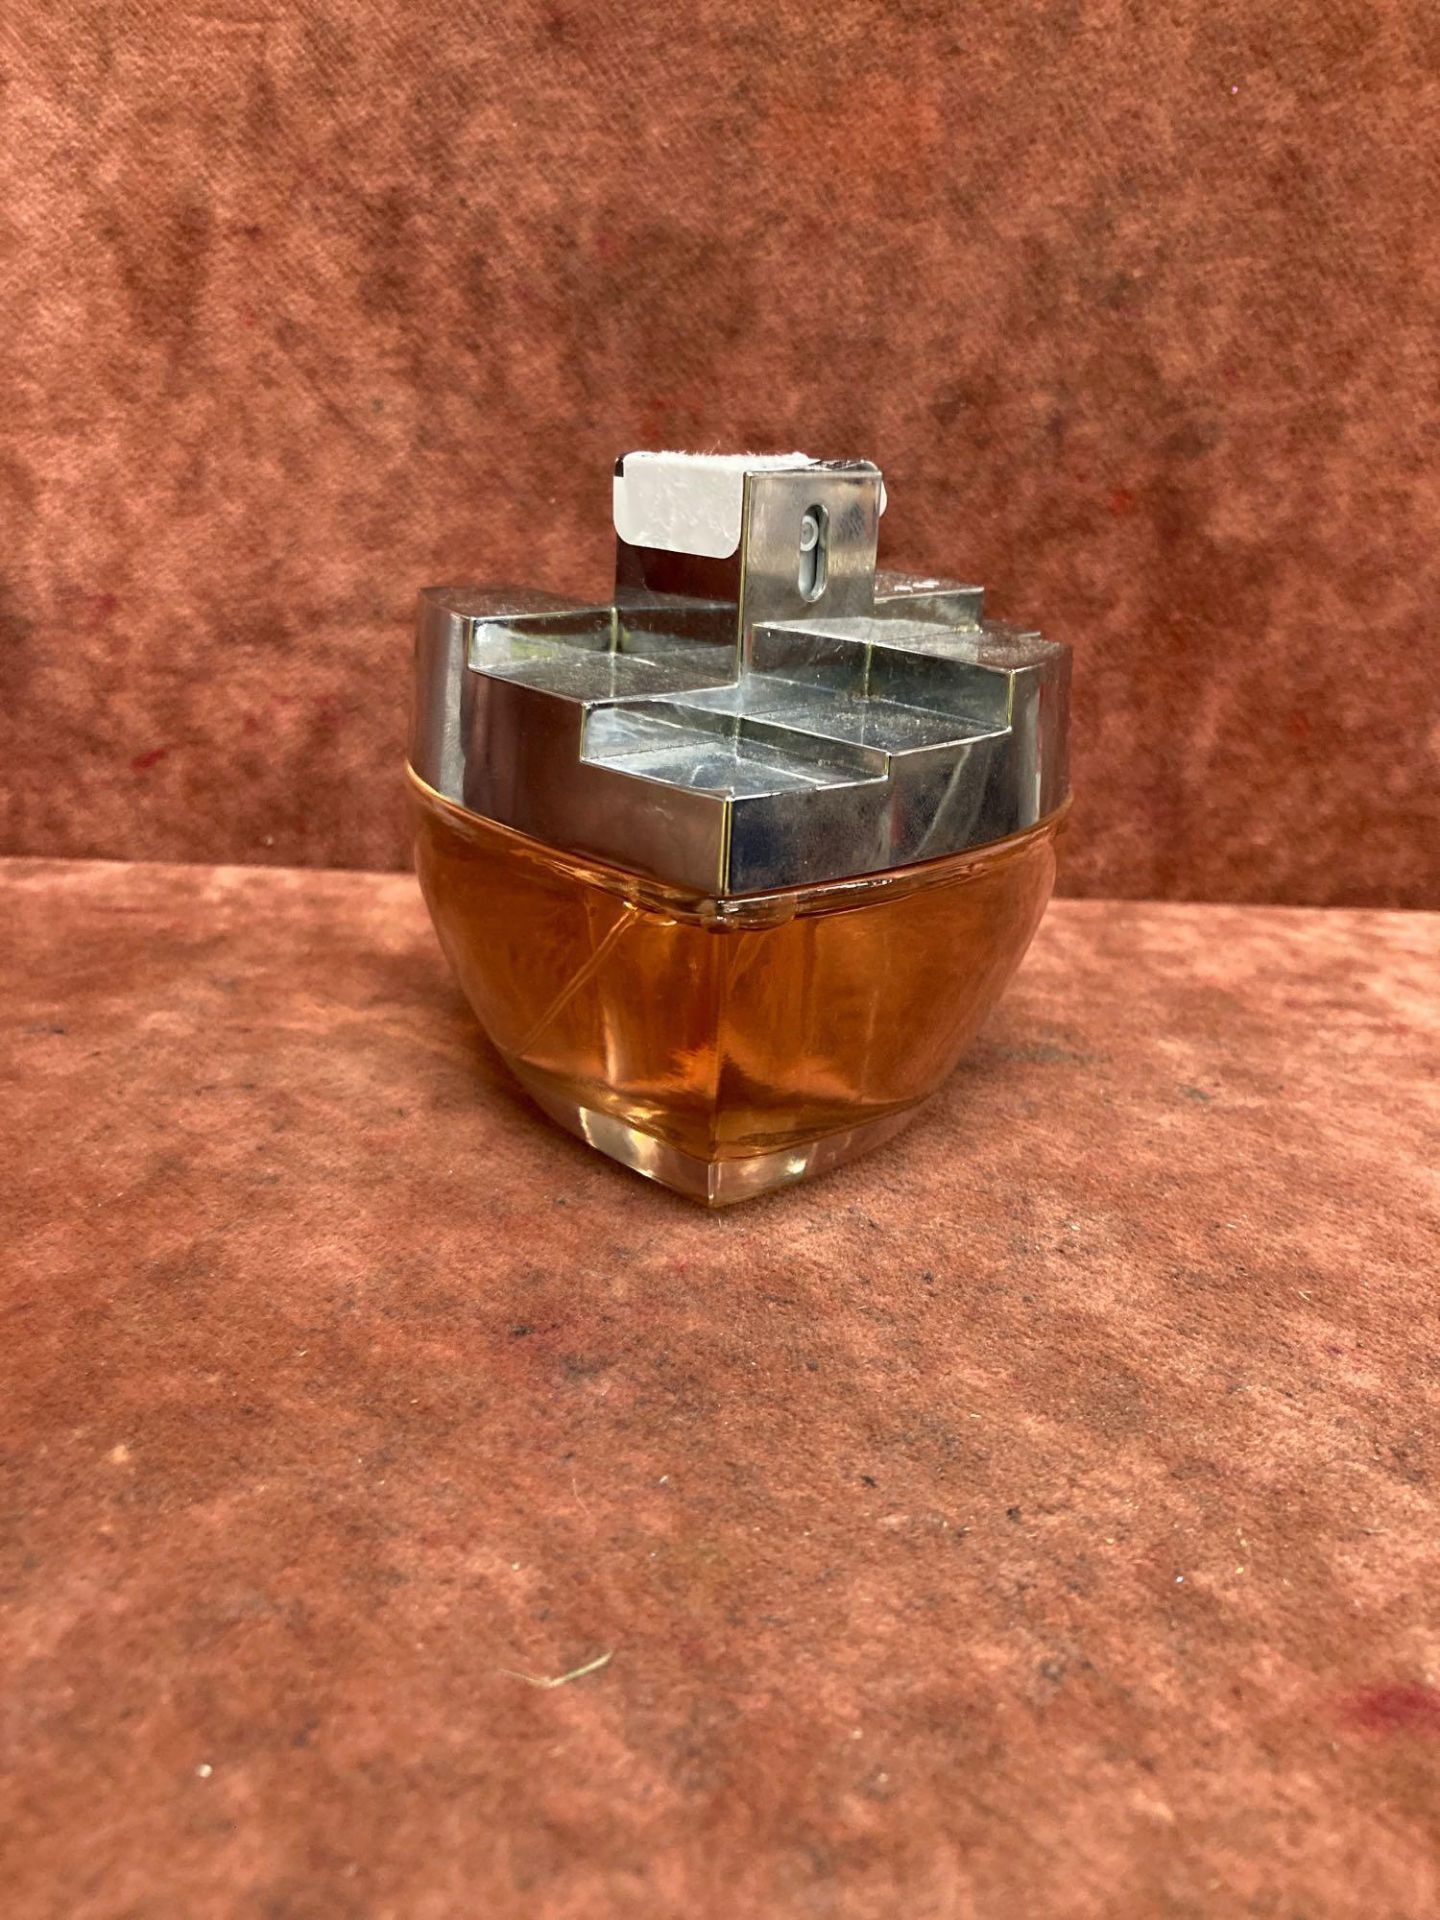 (Jb) RRP £95 Unboxed 100Ml Tester Bottle Of Dkny My Ny Eau De Parfum Spray Ex-Display